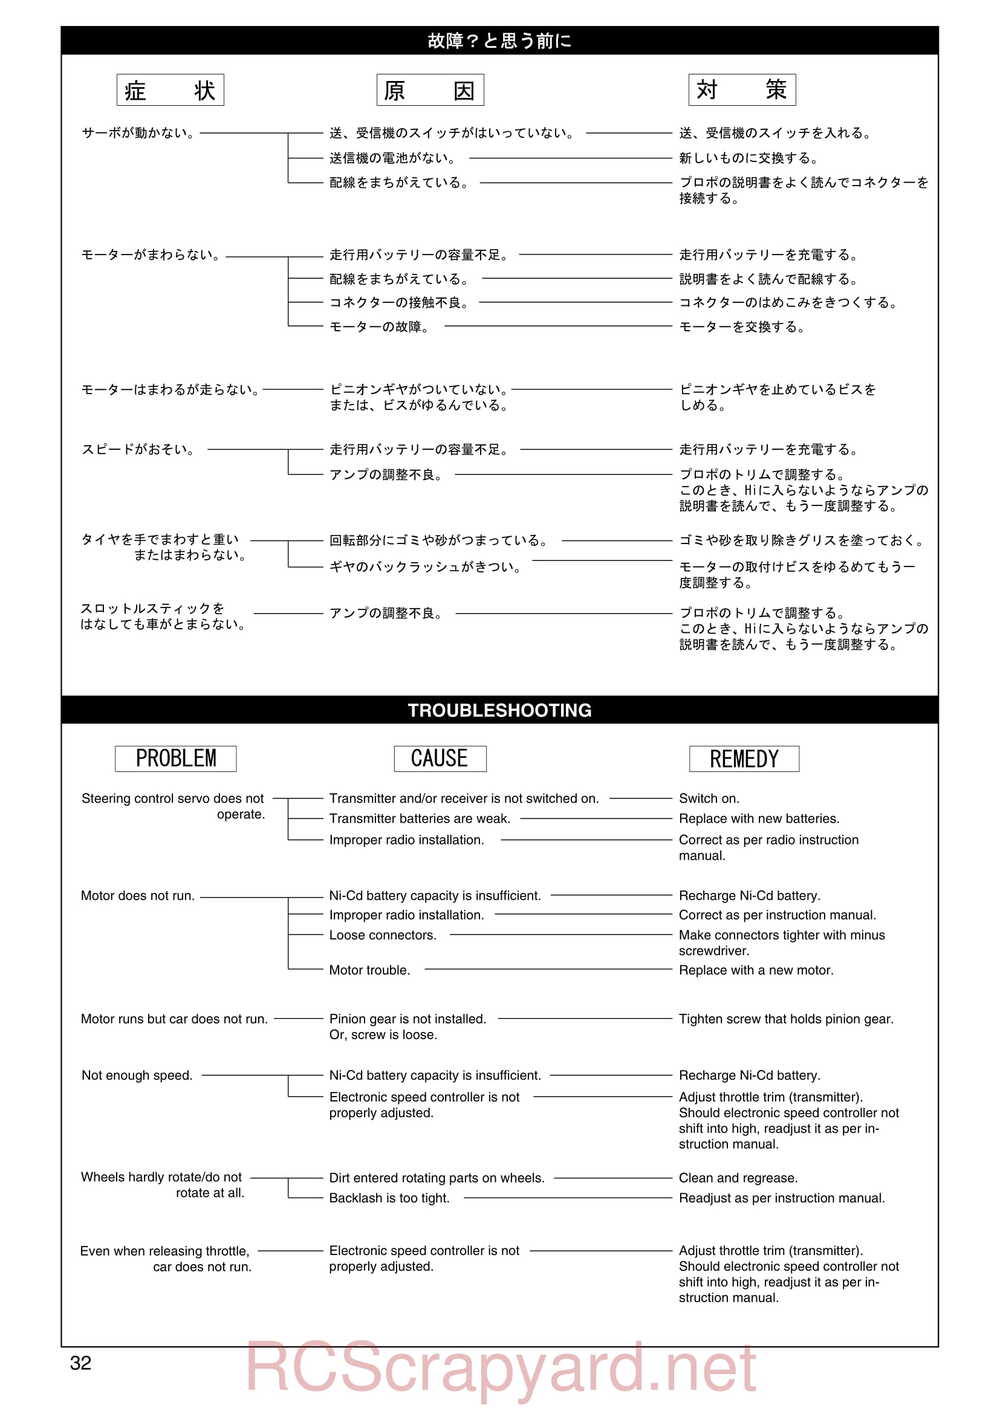 Kyosho - 30101 - KX-One - Manual - Page 32